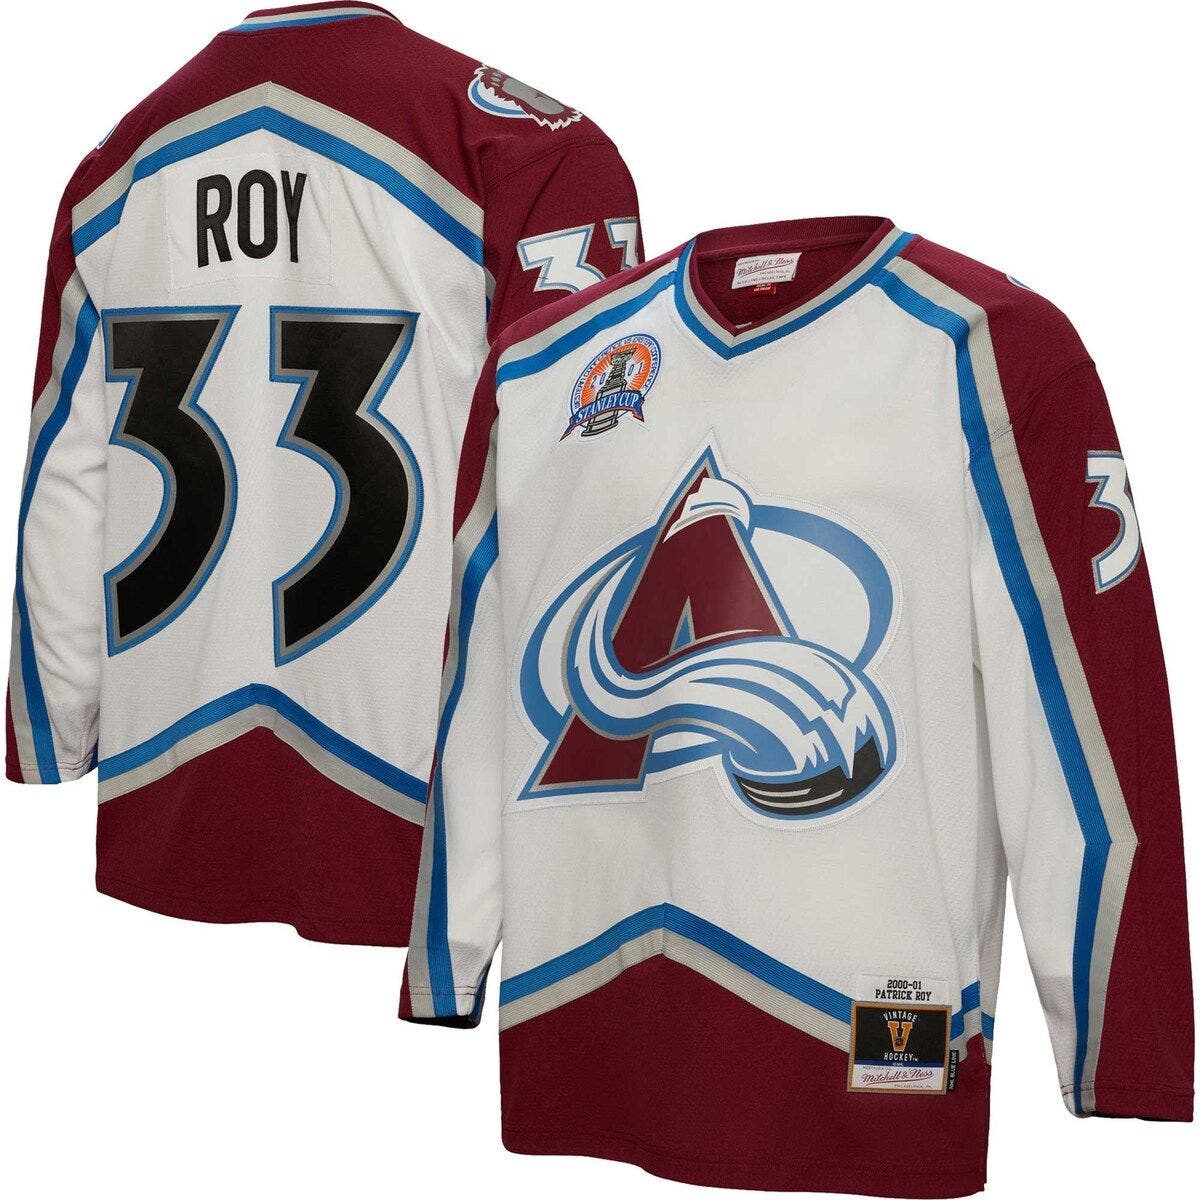 Roy Hopkins replica jersey